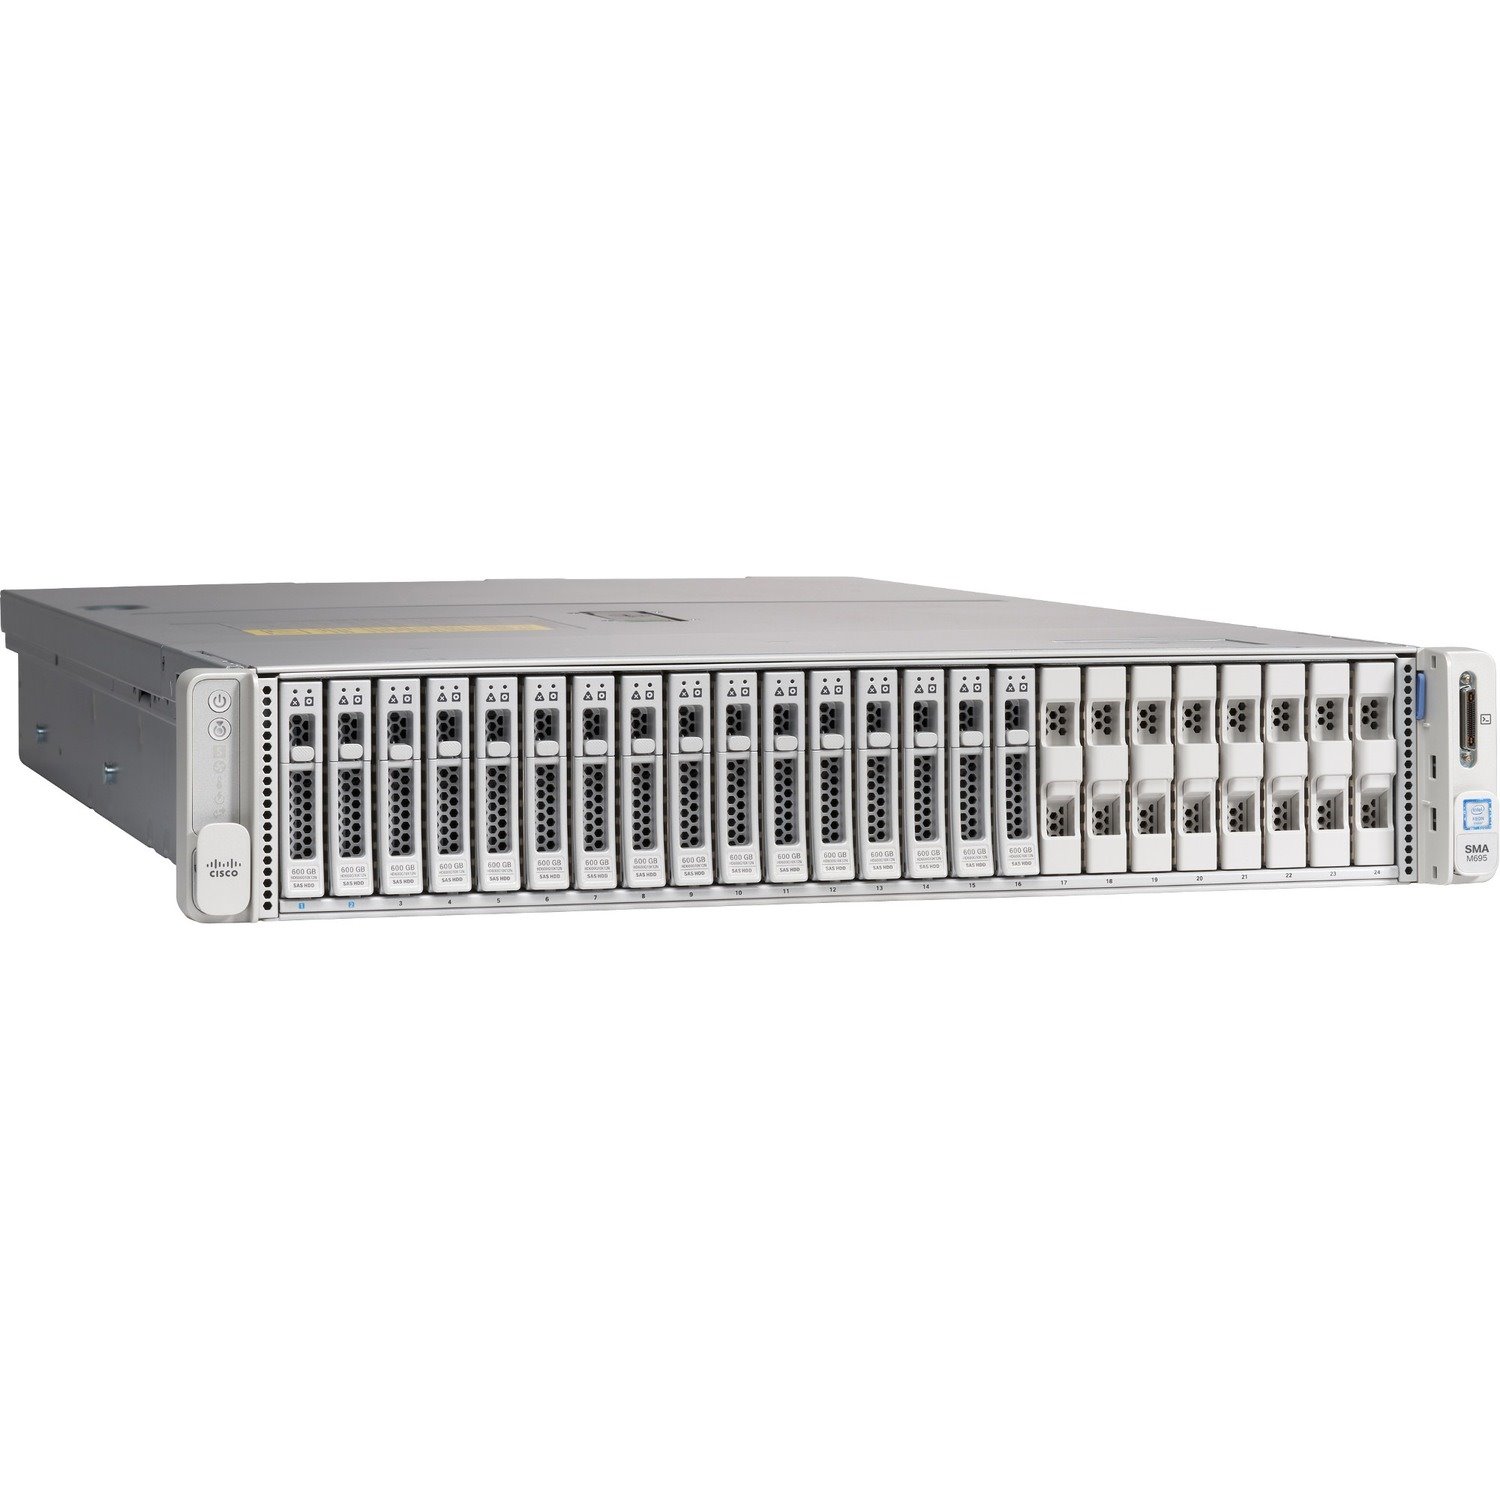 Cisco M695 Network Security/Firewall Appliance